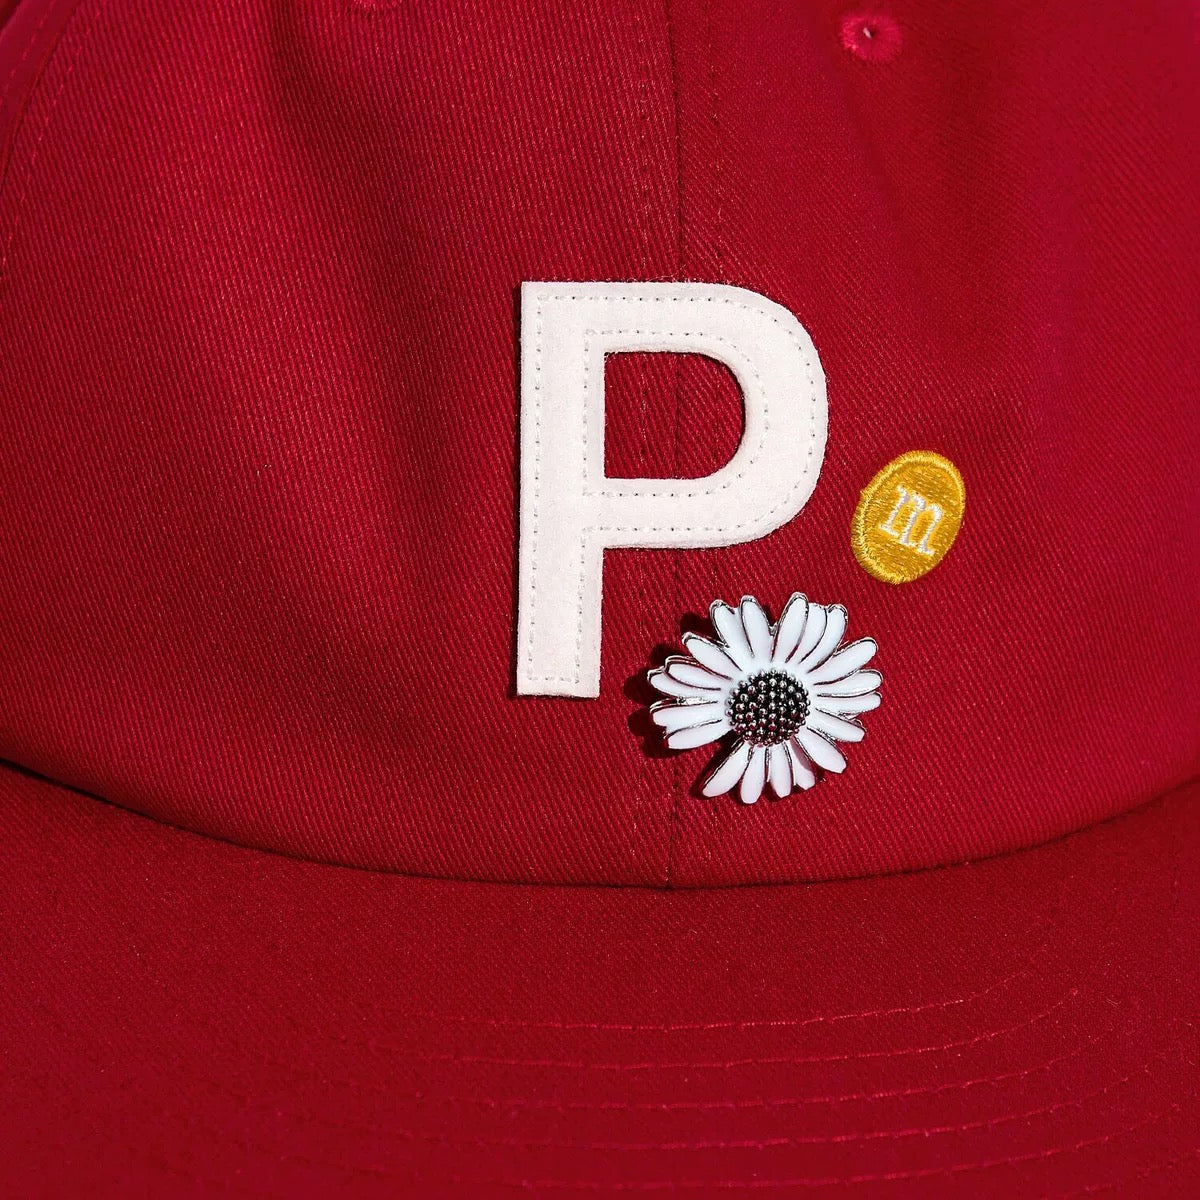 OFF半額 PEACEMINUSONE PMO COTTON CAP #4 RED - 帽子